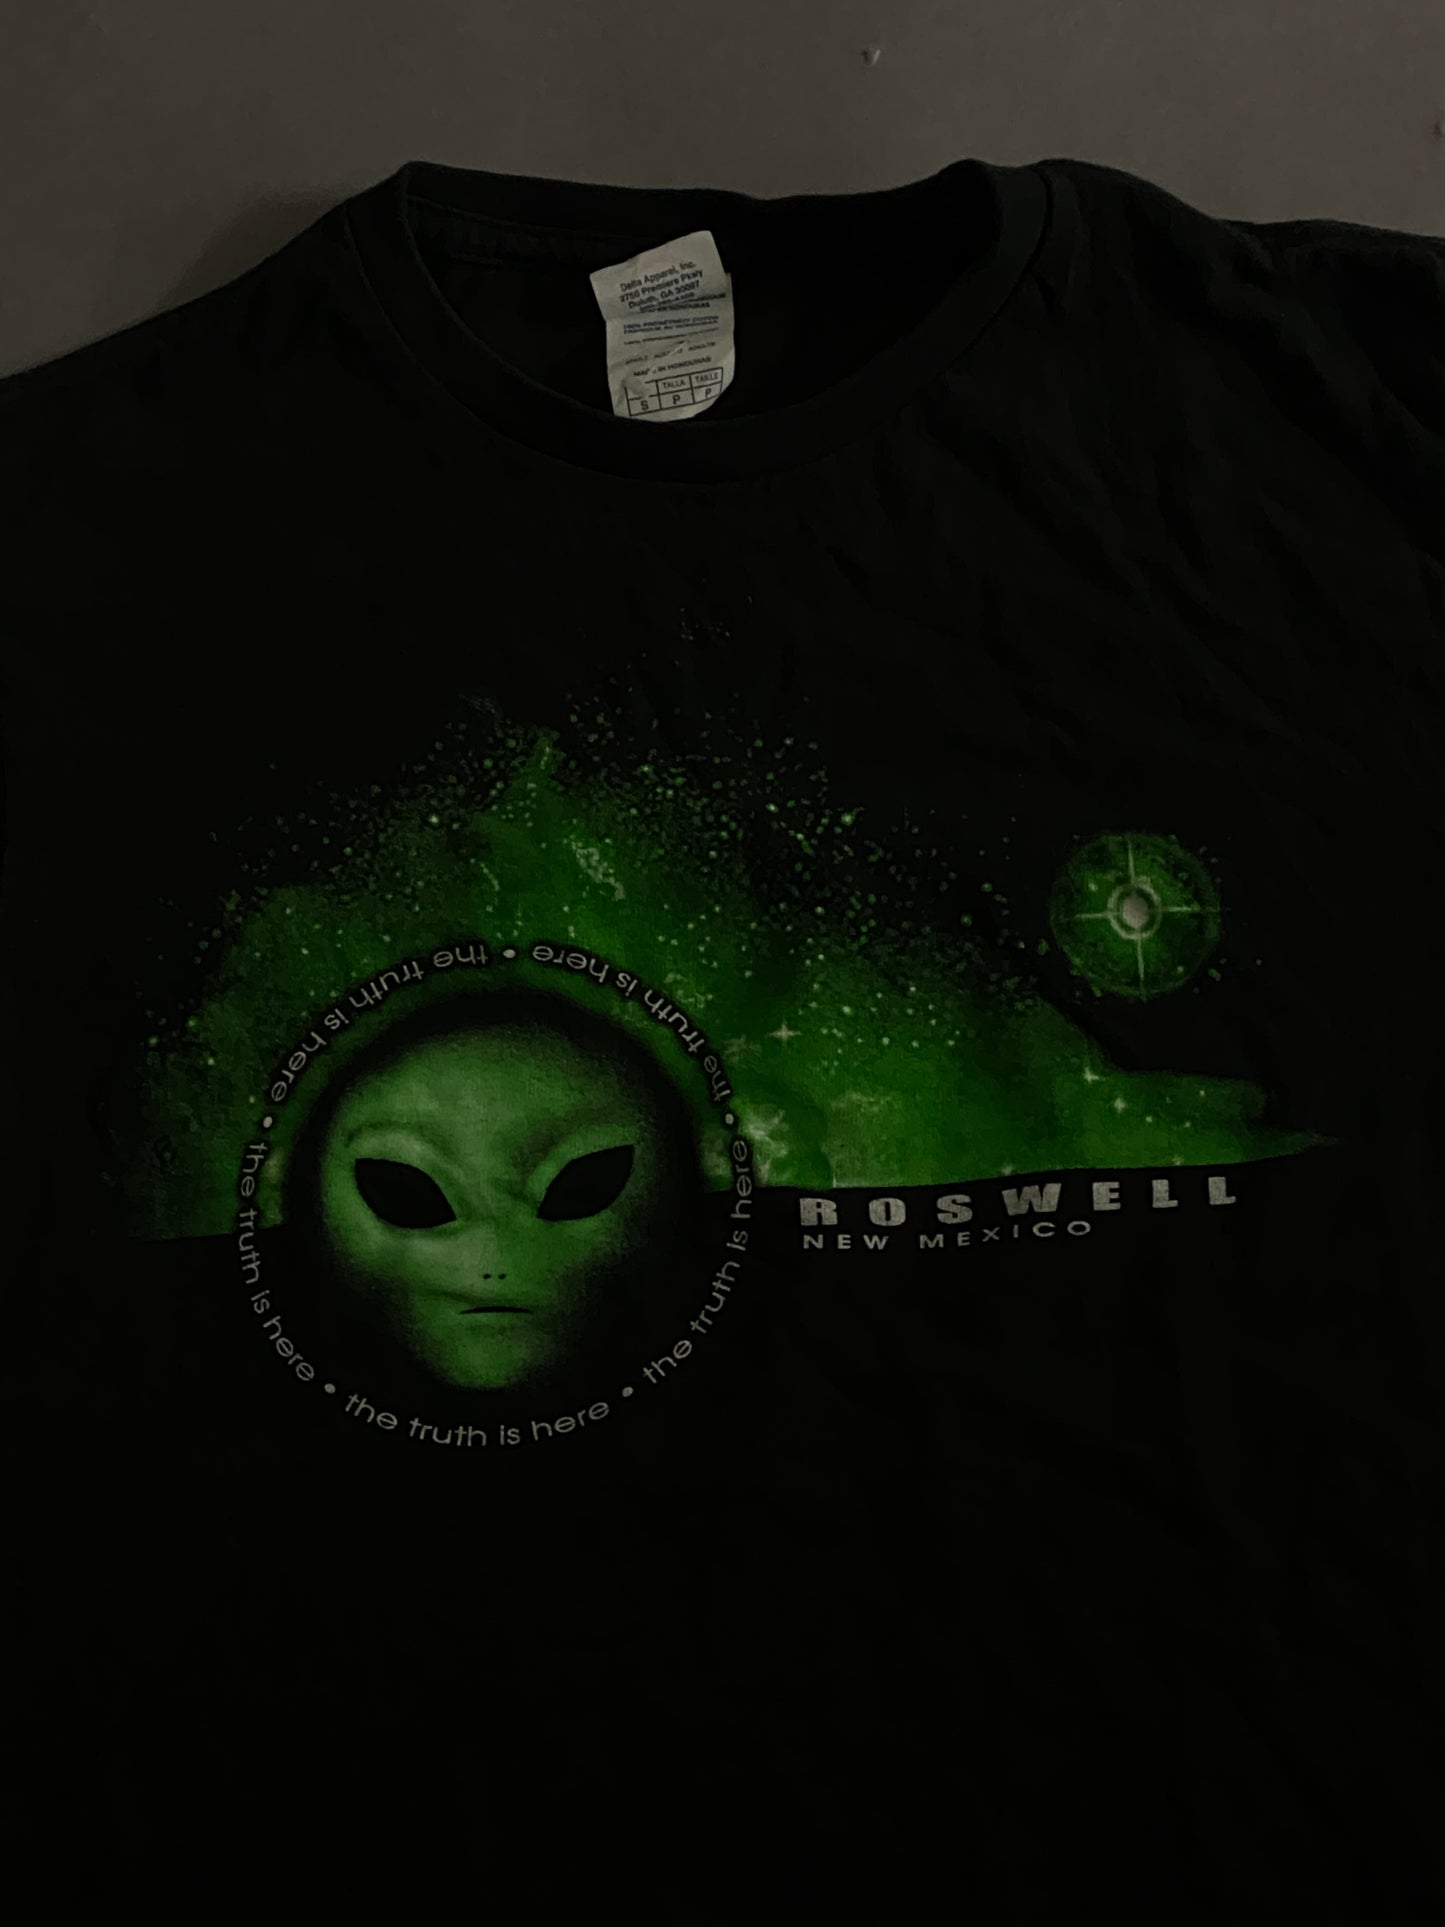 Alien T-shirt (Glow In The Dark)